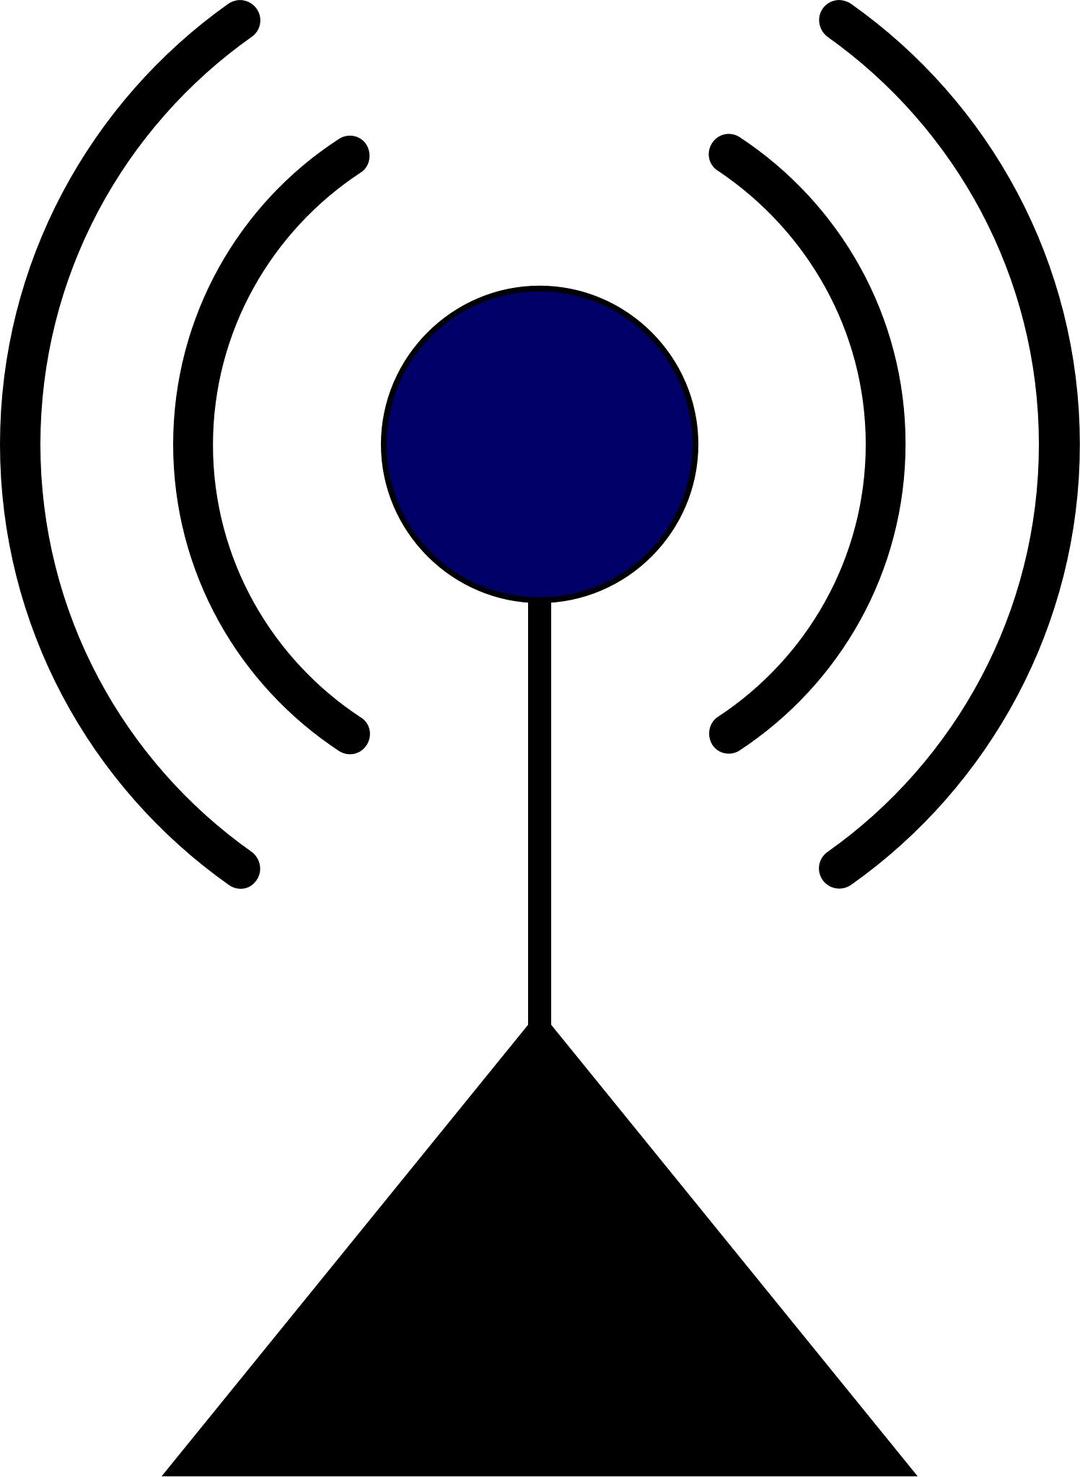 WLAN Access Point Symbol png transparent